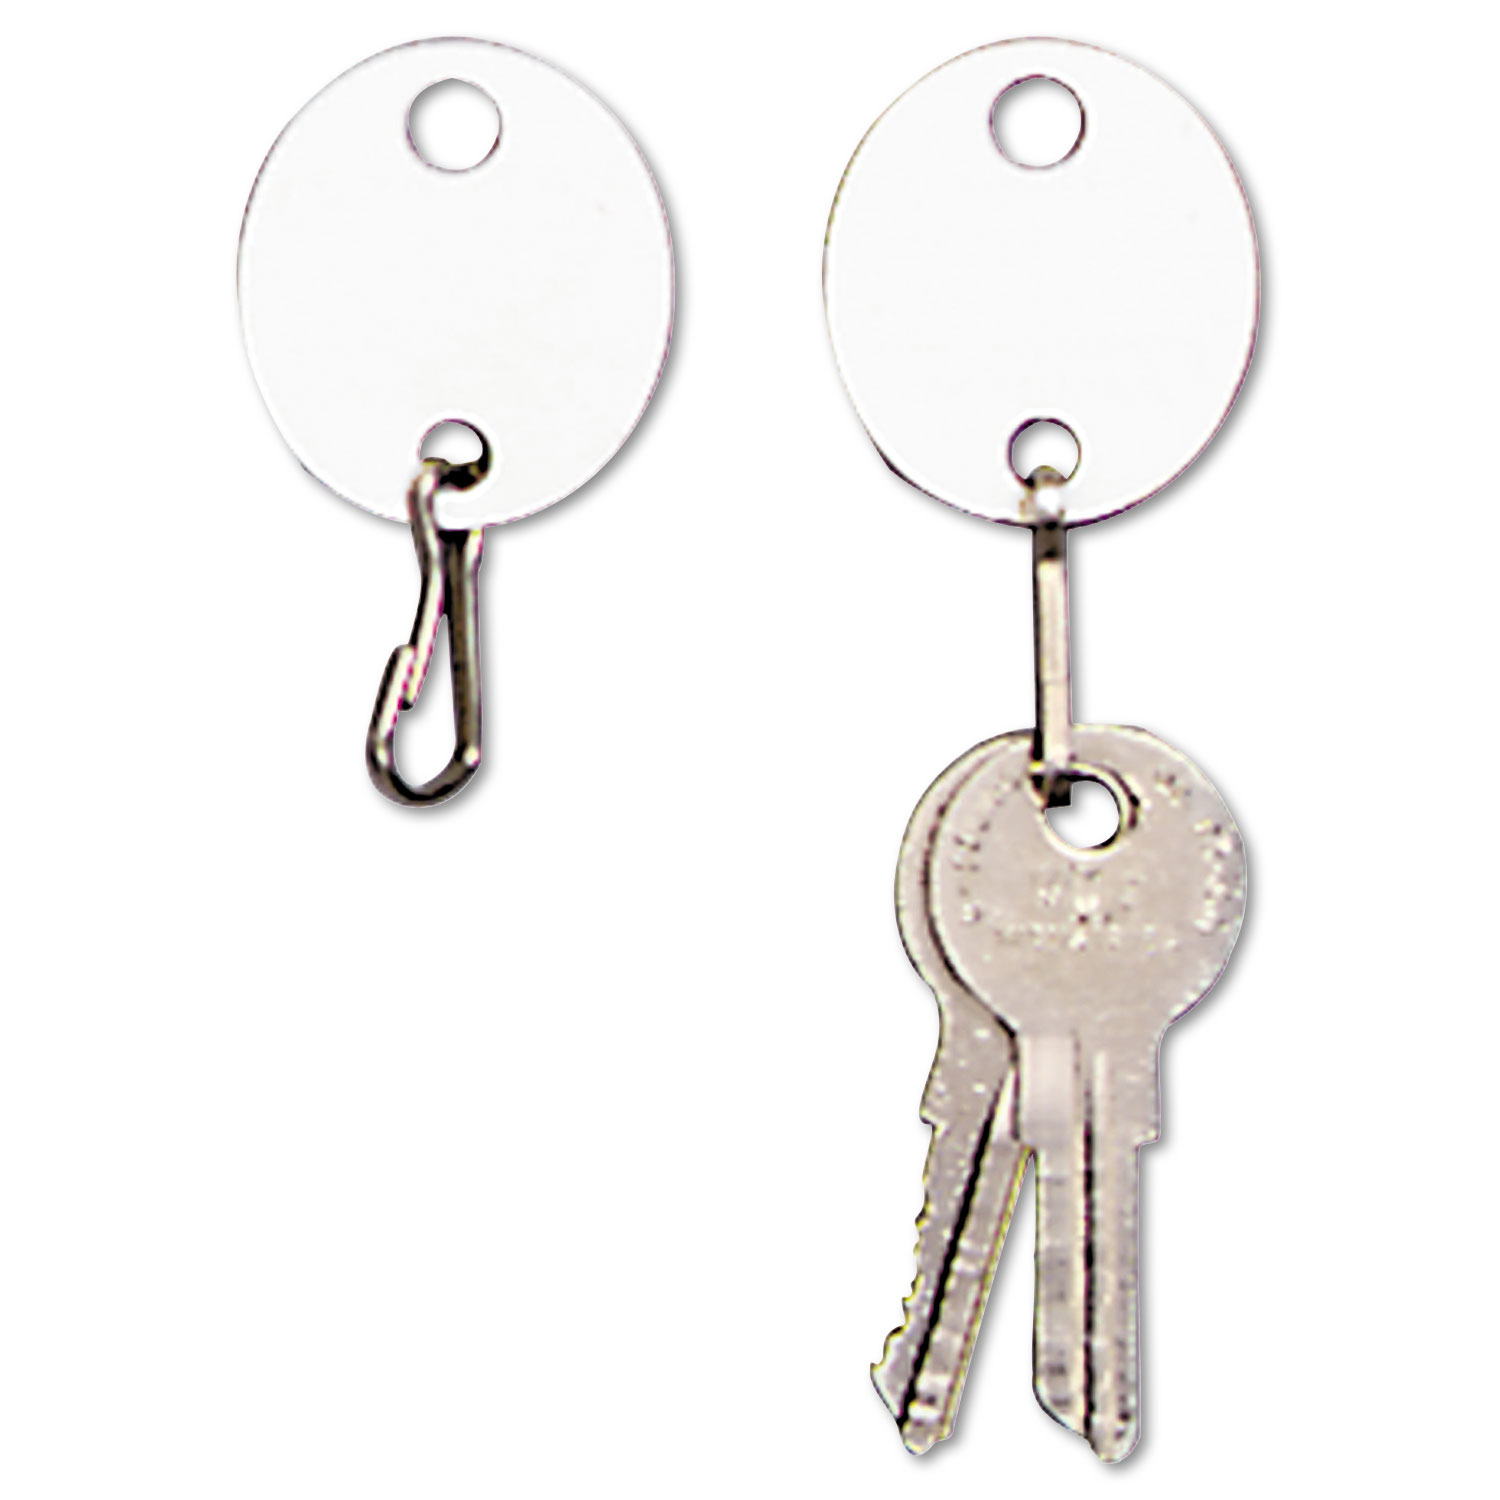  SteelMaster 201800706 Oval Snap-Hook Key Tags, Plastic, 1 1/8 x 1 1/4, White, 20/Pack (MMF201800706) 